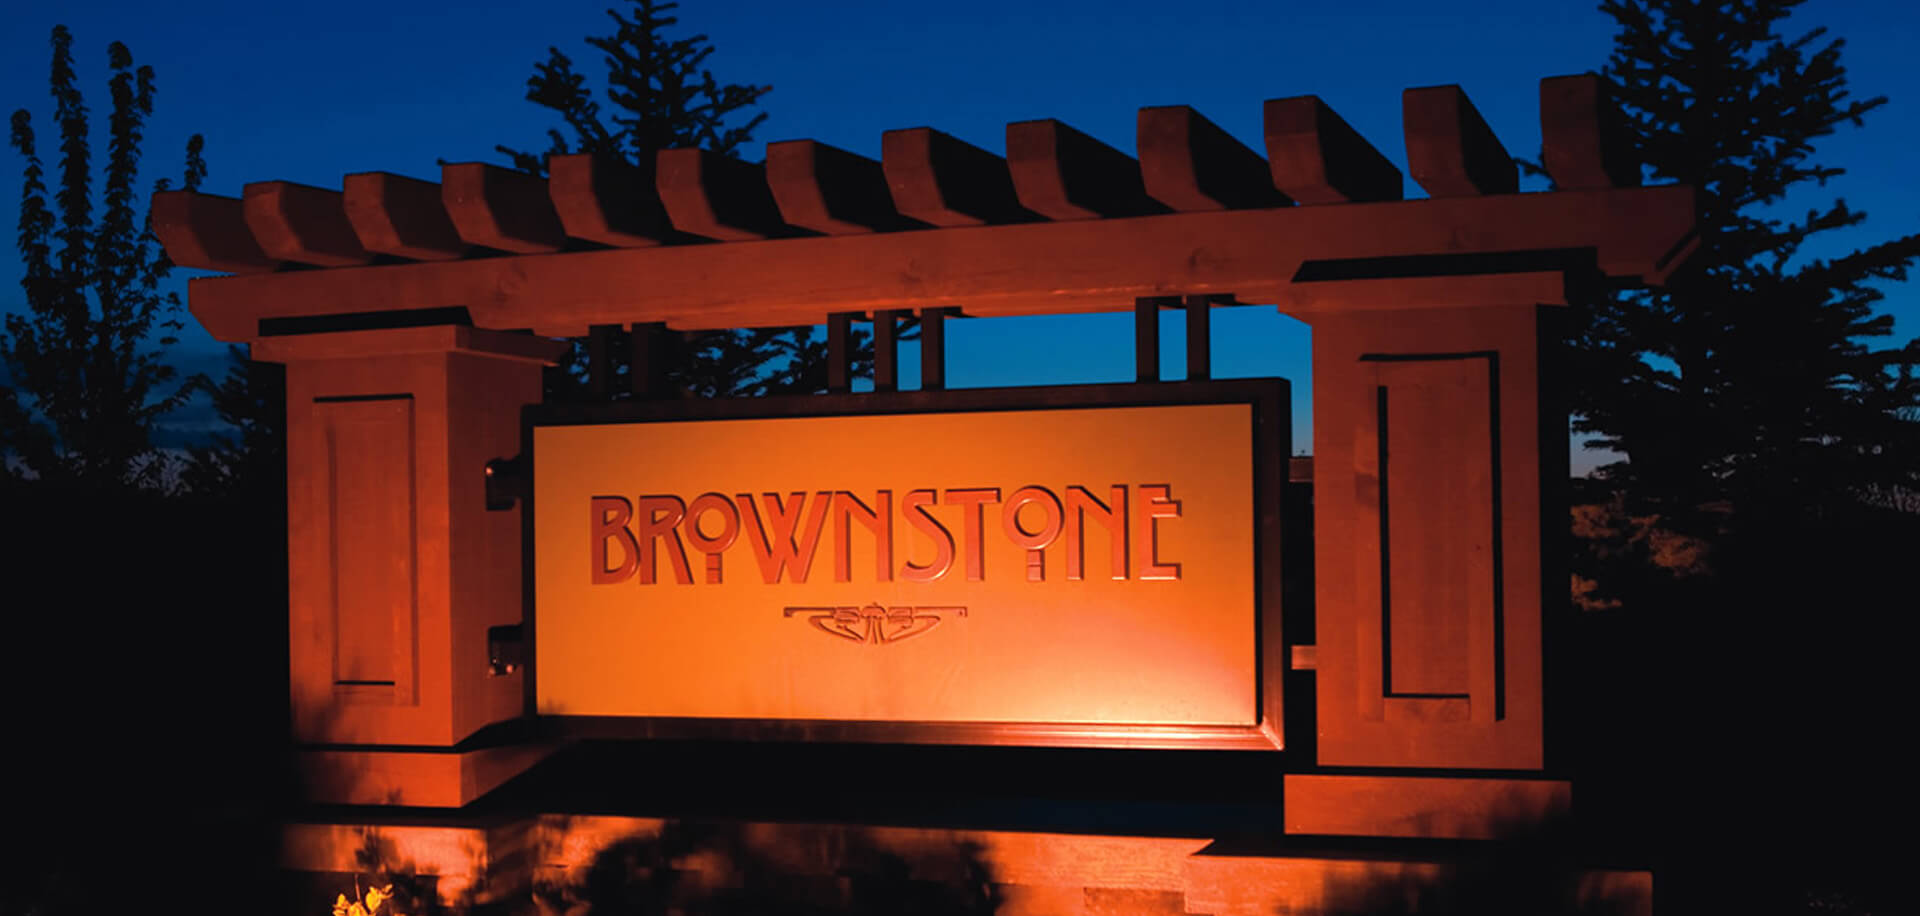 Brownstone Subdivision Boise ID